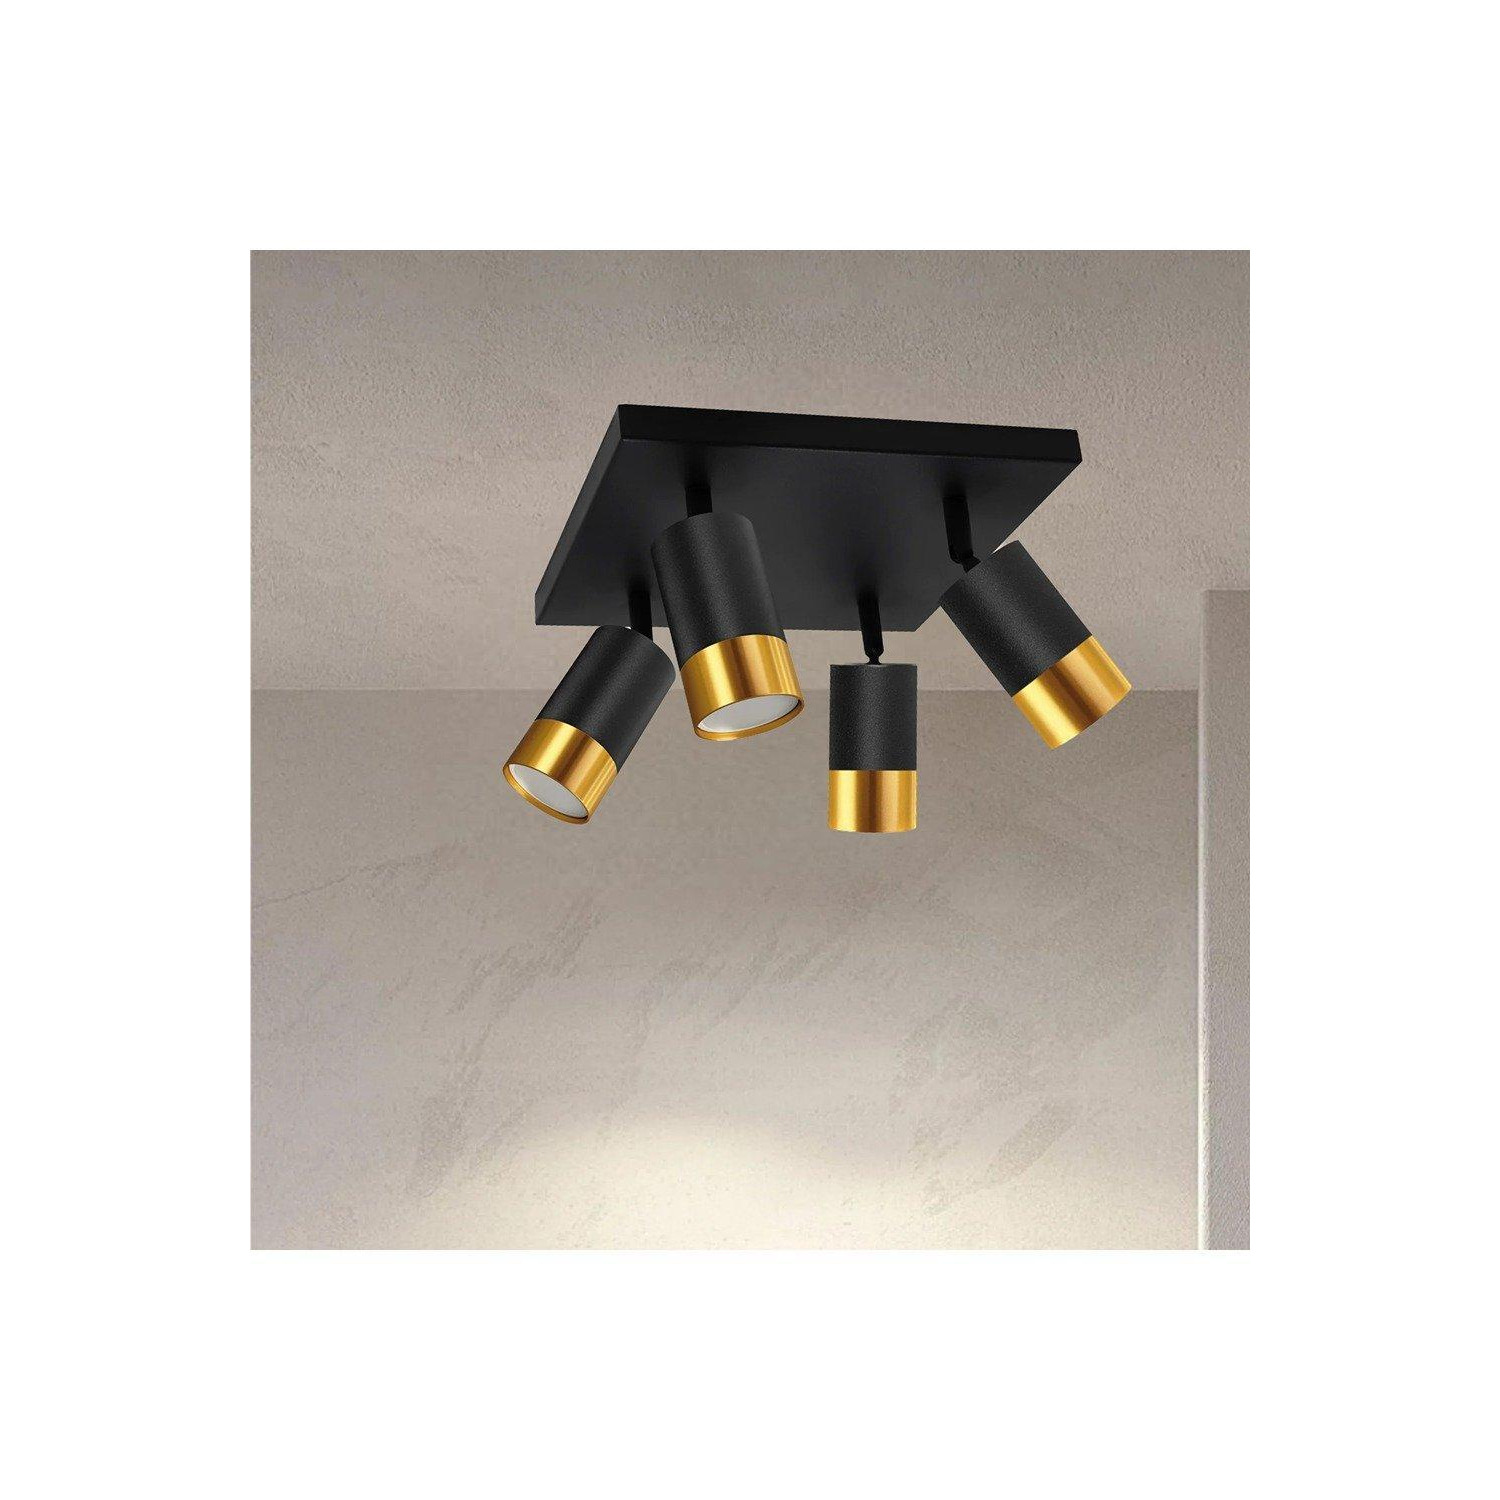 'Puzon'  Black & Gold GU10 Adjustable Four Head GU10 Ceiling Spotlight Bar Light - image 1